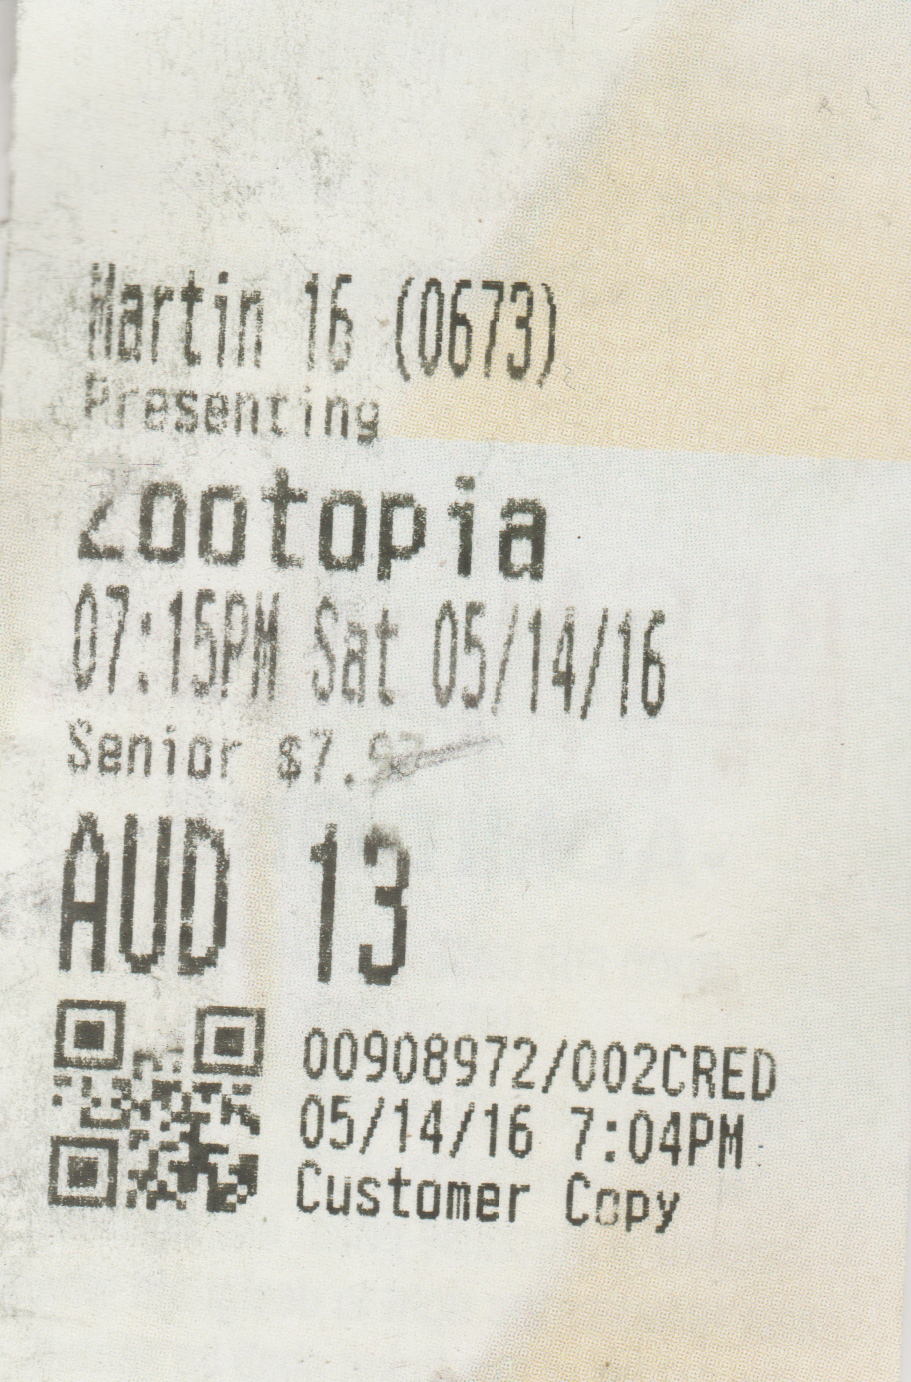 2016-05-16 - Saturday - 07:15 PM - Zootopia - 7.50 USD, Regal cinema, Martin 16 or 0673, 07:04 PM, Marilyn, Larry, 2pics-1.png